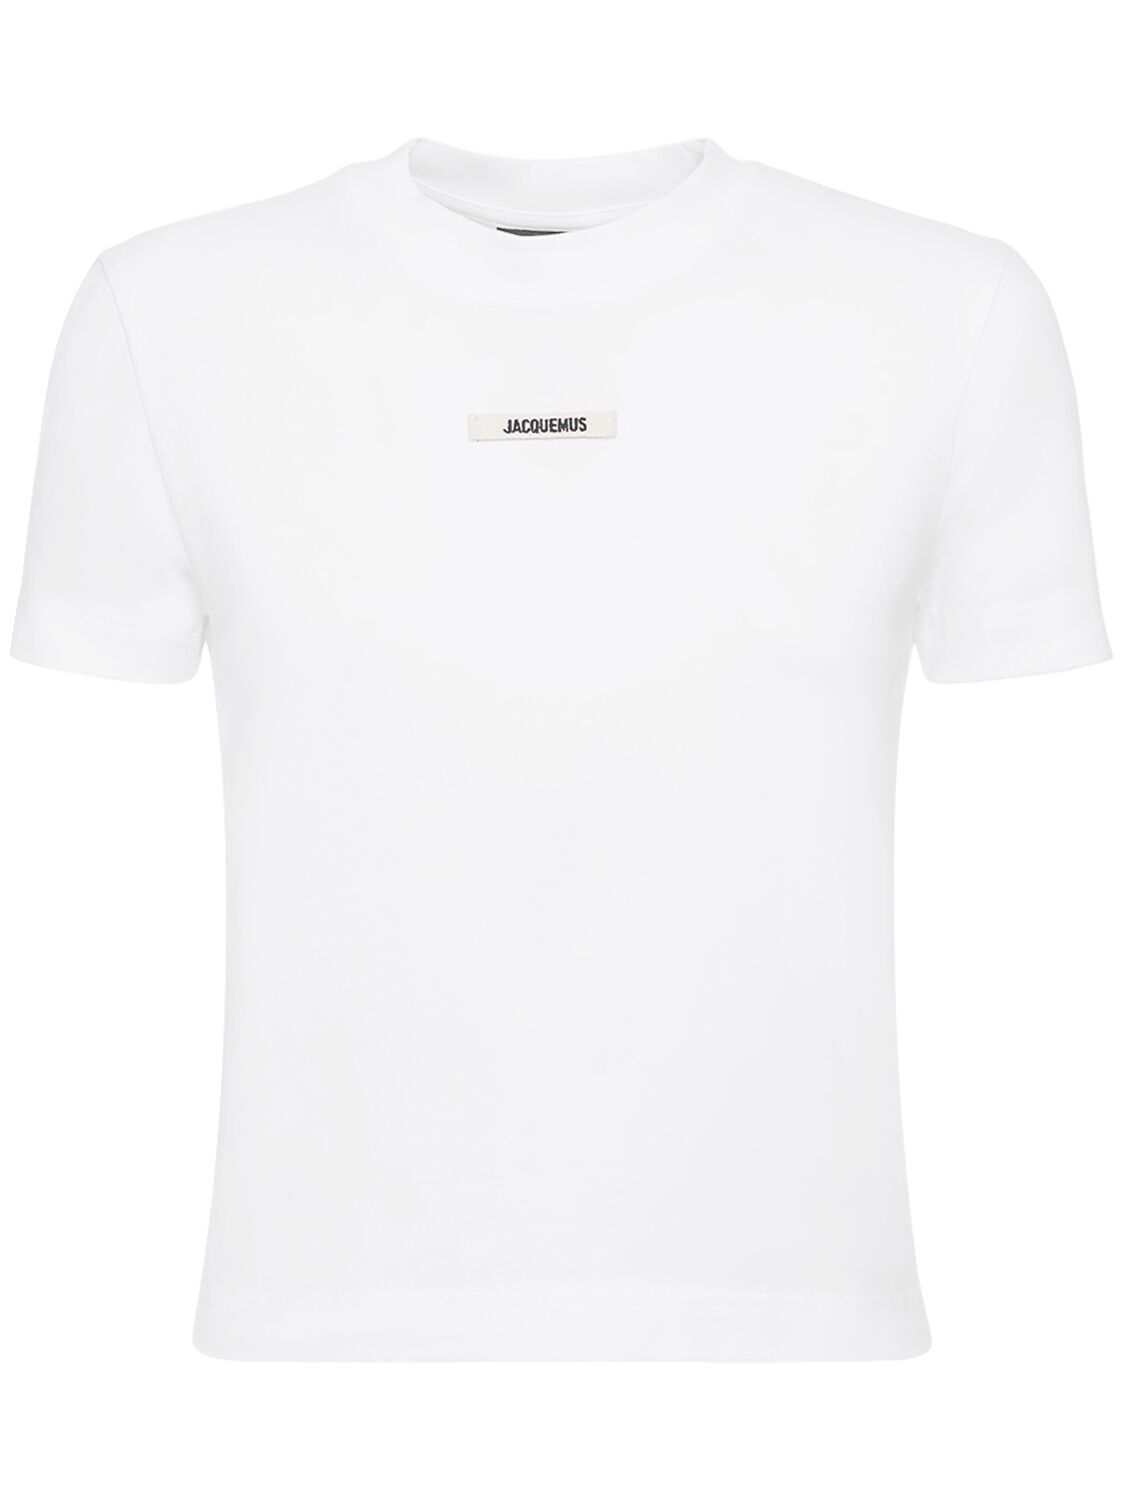 Jacquemus Le T-shirt Gros Grain Cotton T-shirt In White